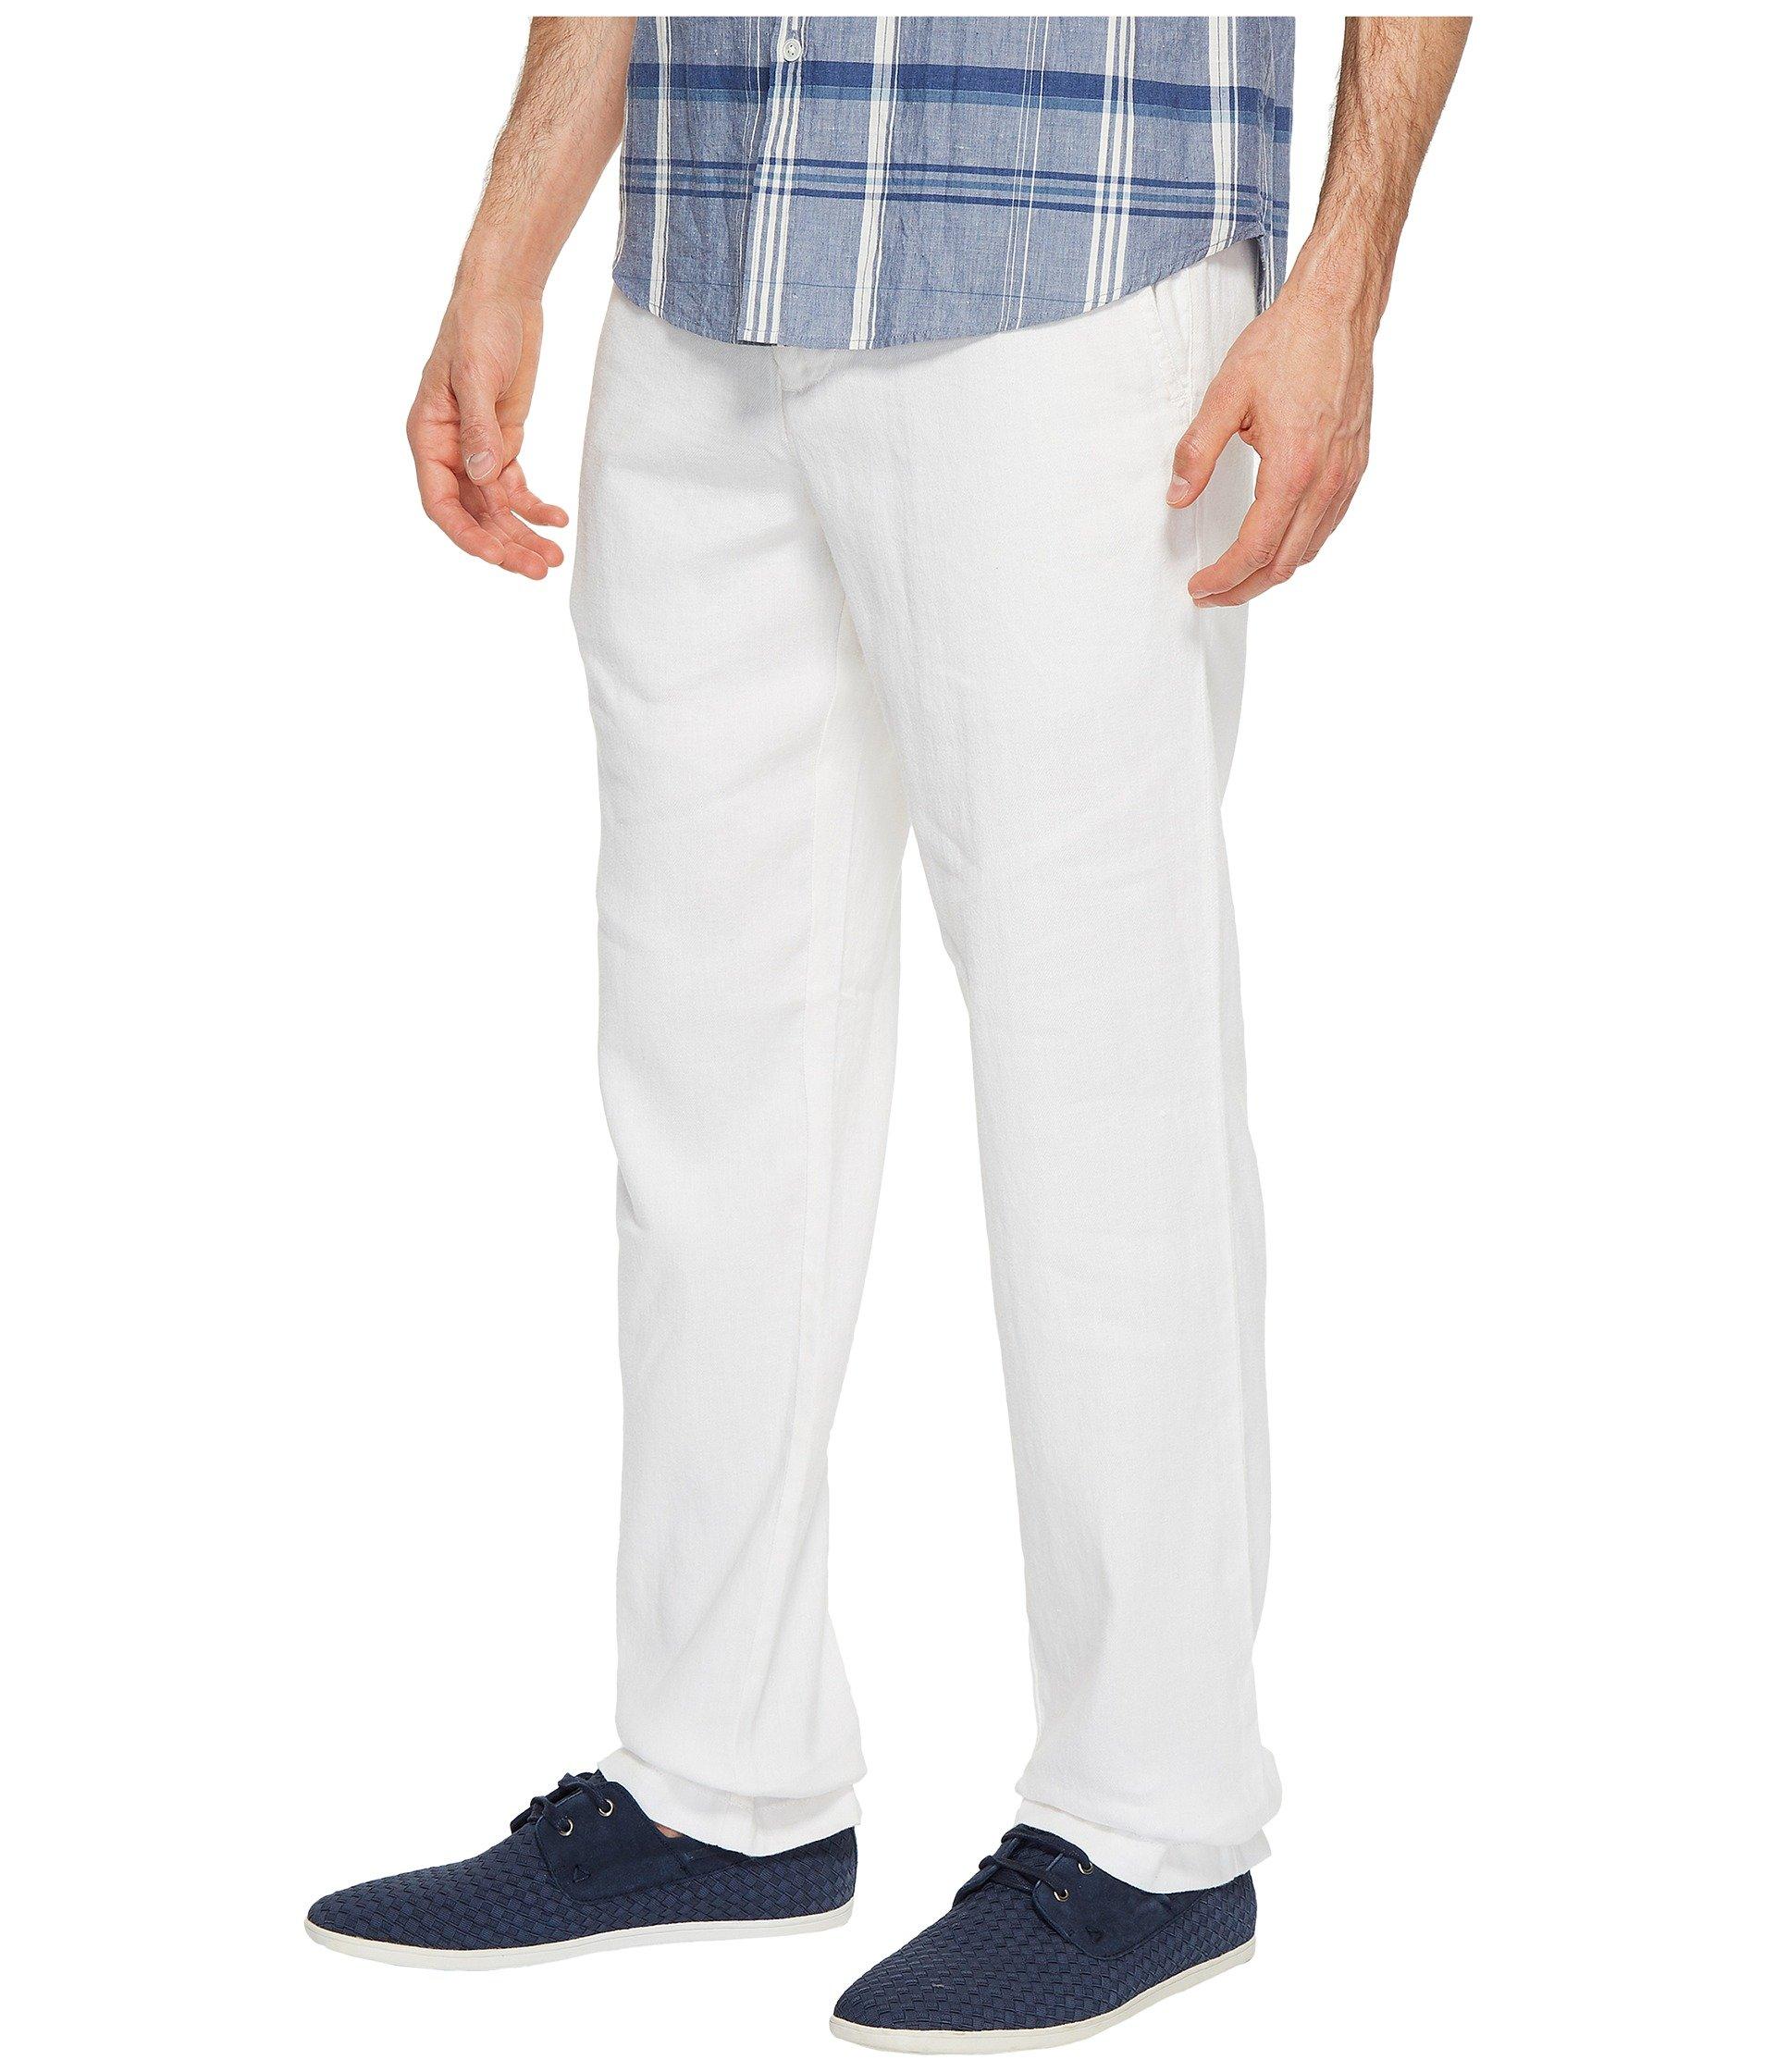 Tommy Bahama Beach Linen Elastic Waist Pants in White for Men - Lyst